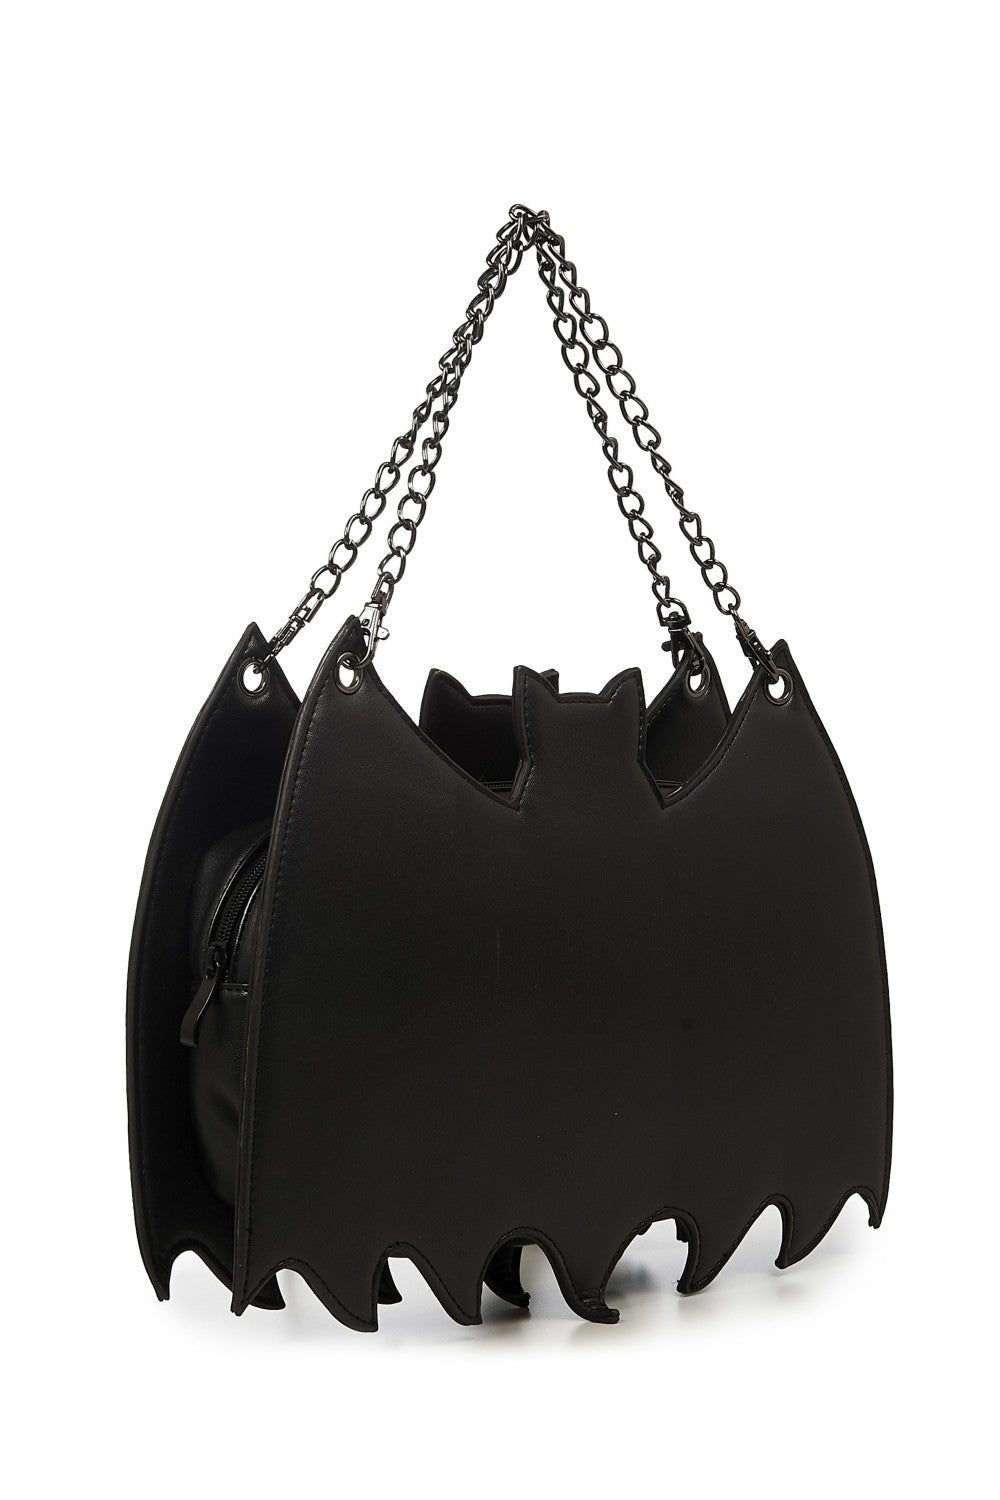 Banned Celebration Gothic Bat Handbag & Backpack